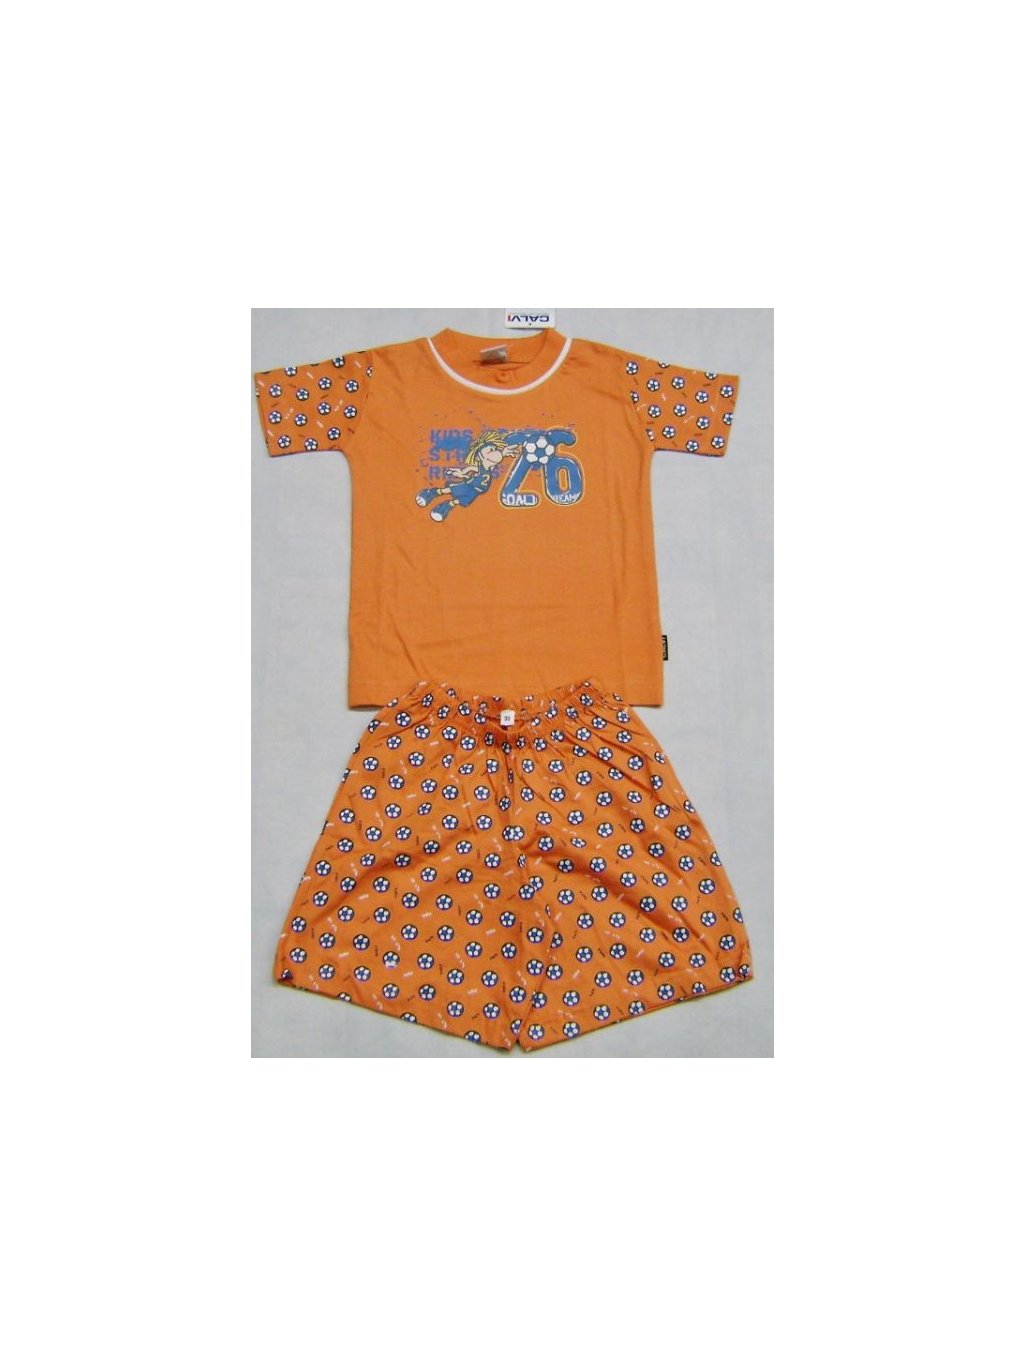 Pyžamo dětské chlapecké krátké (90-128) CALVI 21-010 oranžová 90